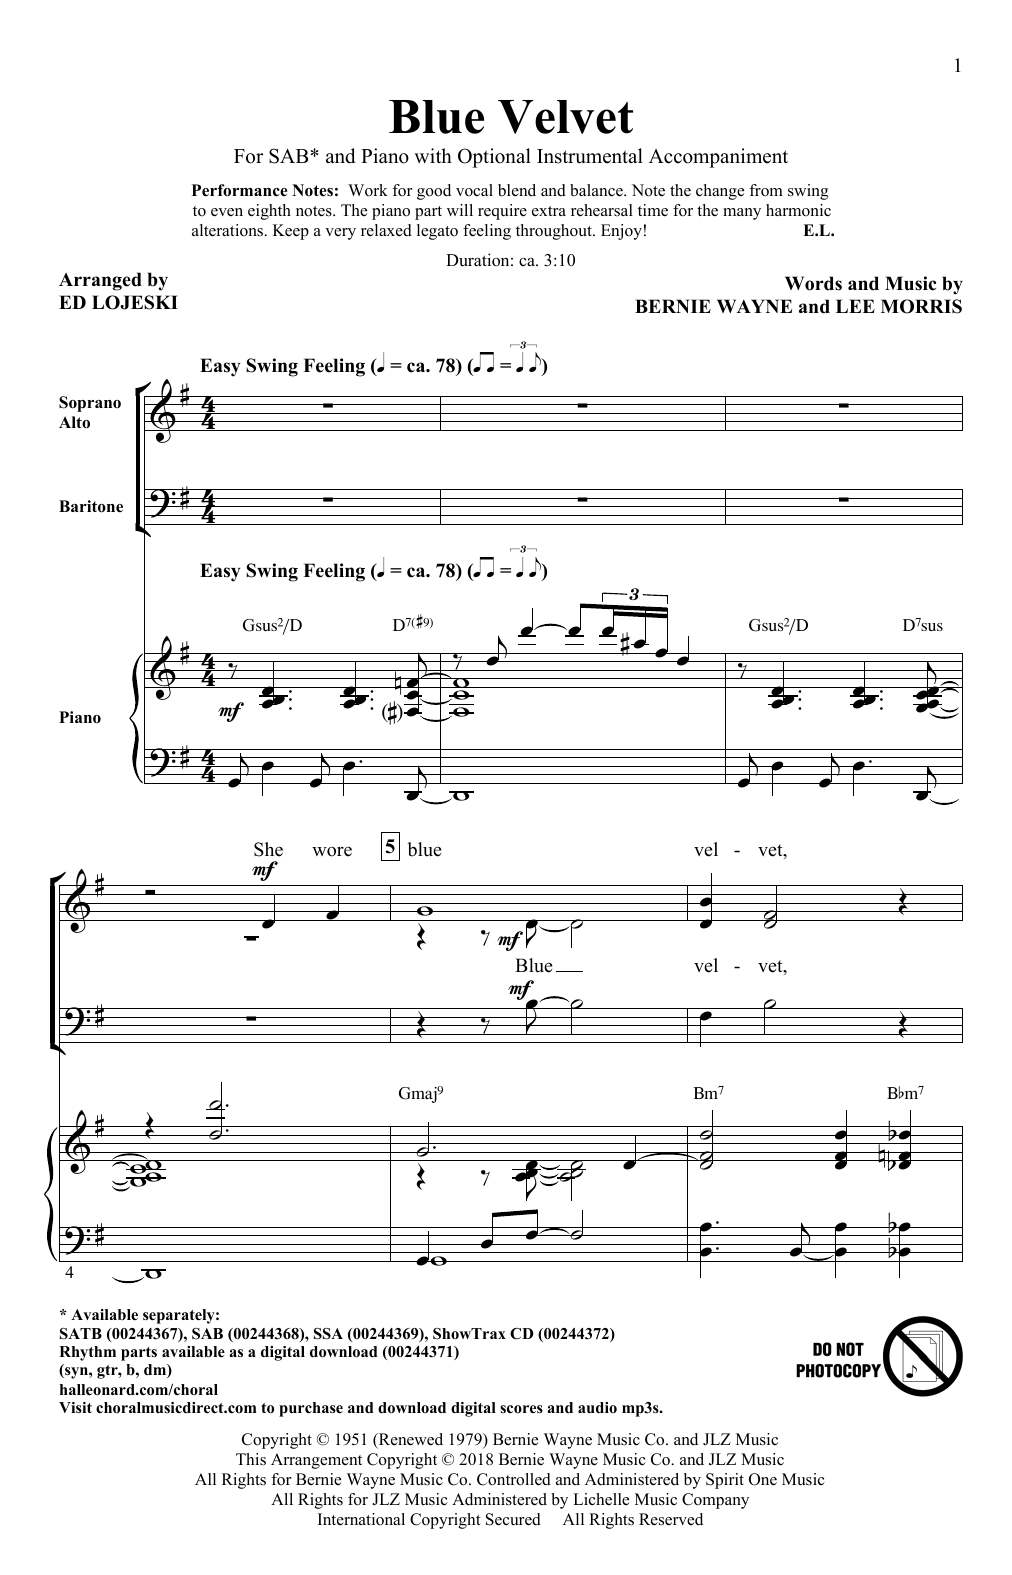 Ed Lojeski Blue Velvet sheet music notes and chords arranged for SAB Choir